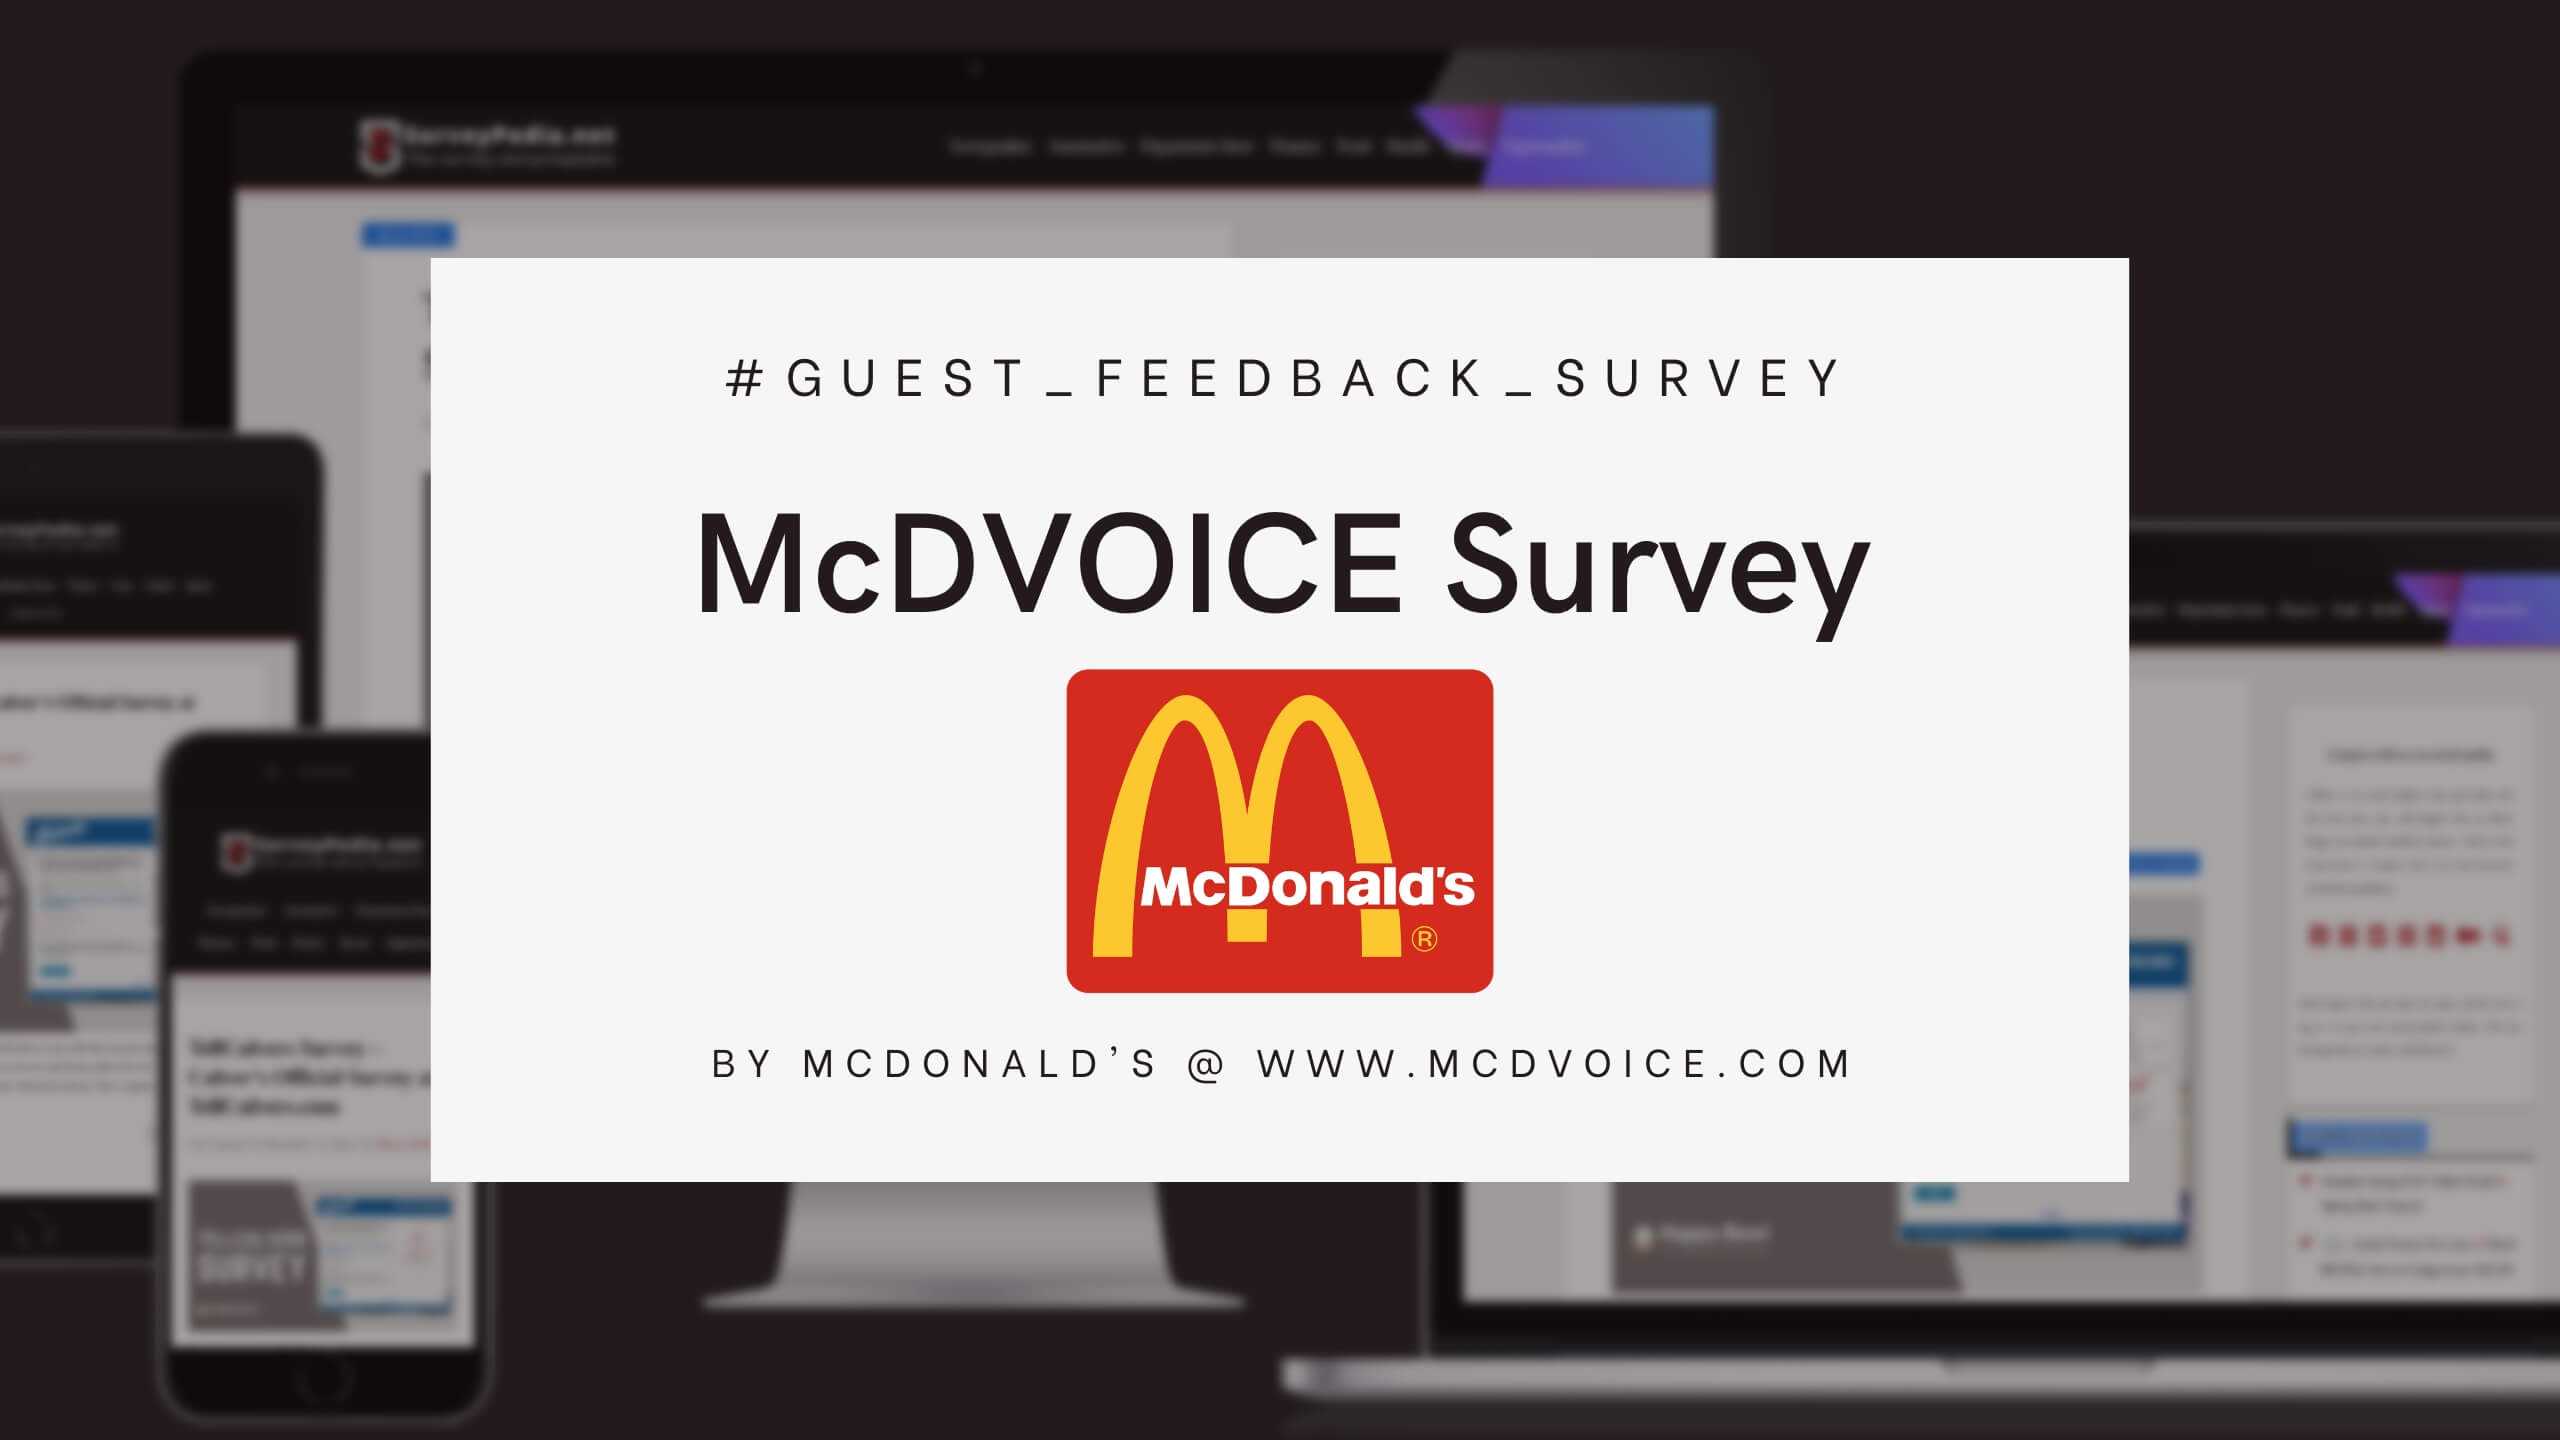 McDVOICE Survey: McDonald's Official Customer Satisfaction Survey at www.mcdvoice.com